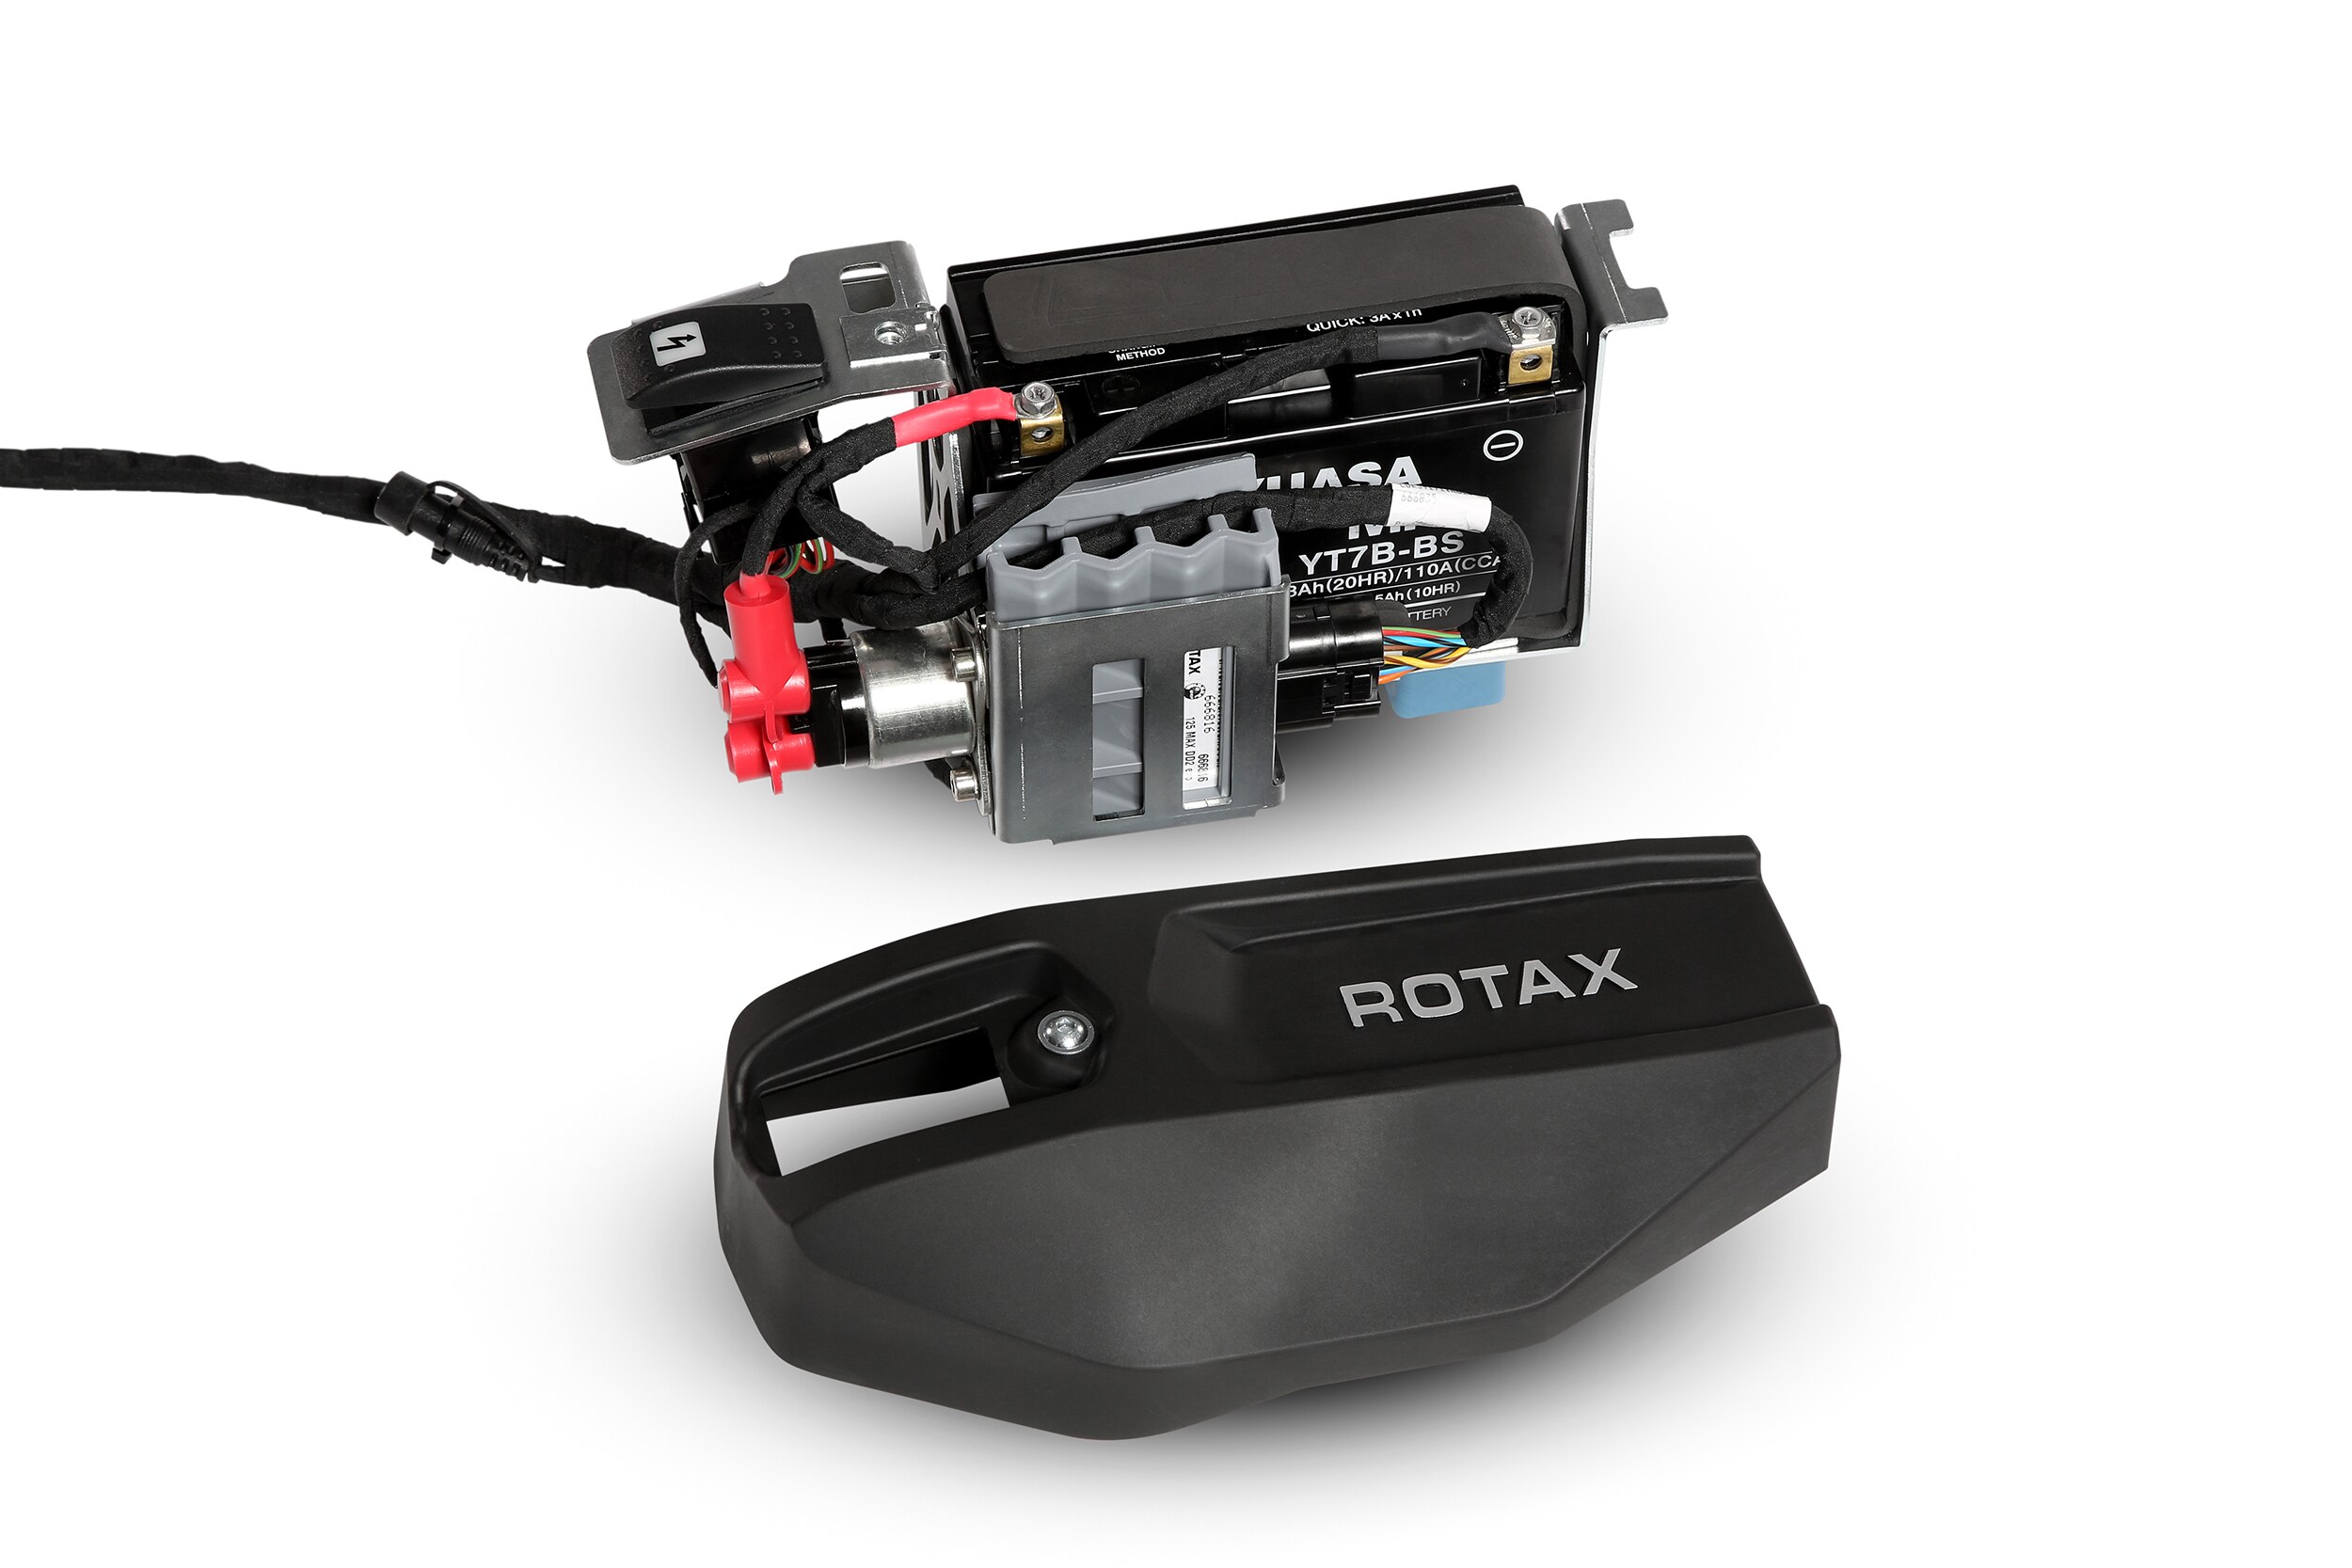 Rotax 125 Max Senior Combo 2 x Engine + 1 x Accessory Box